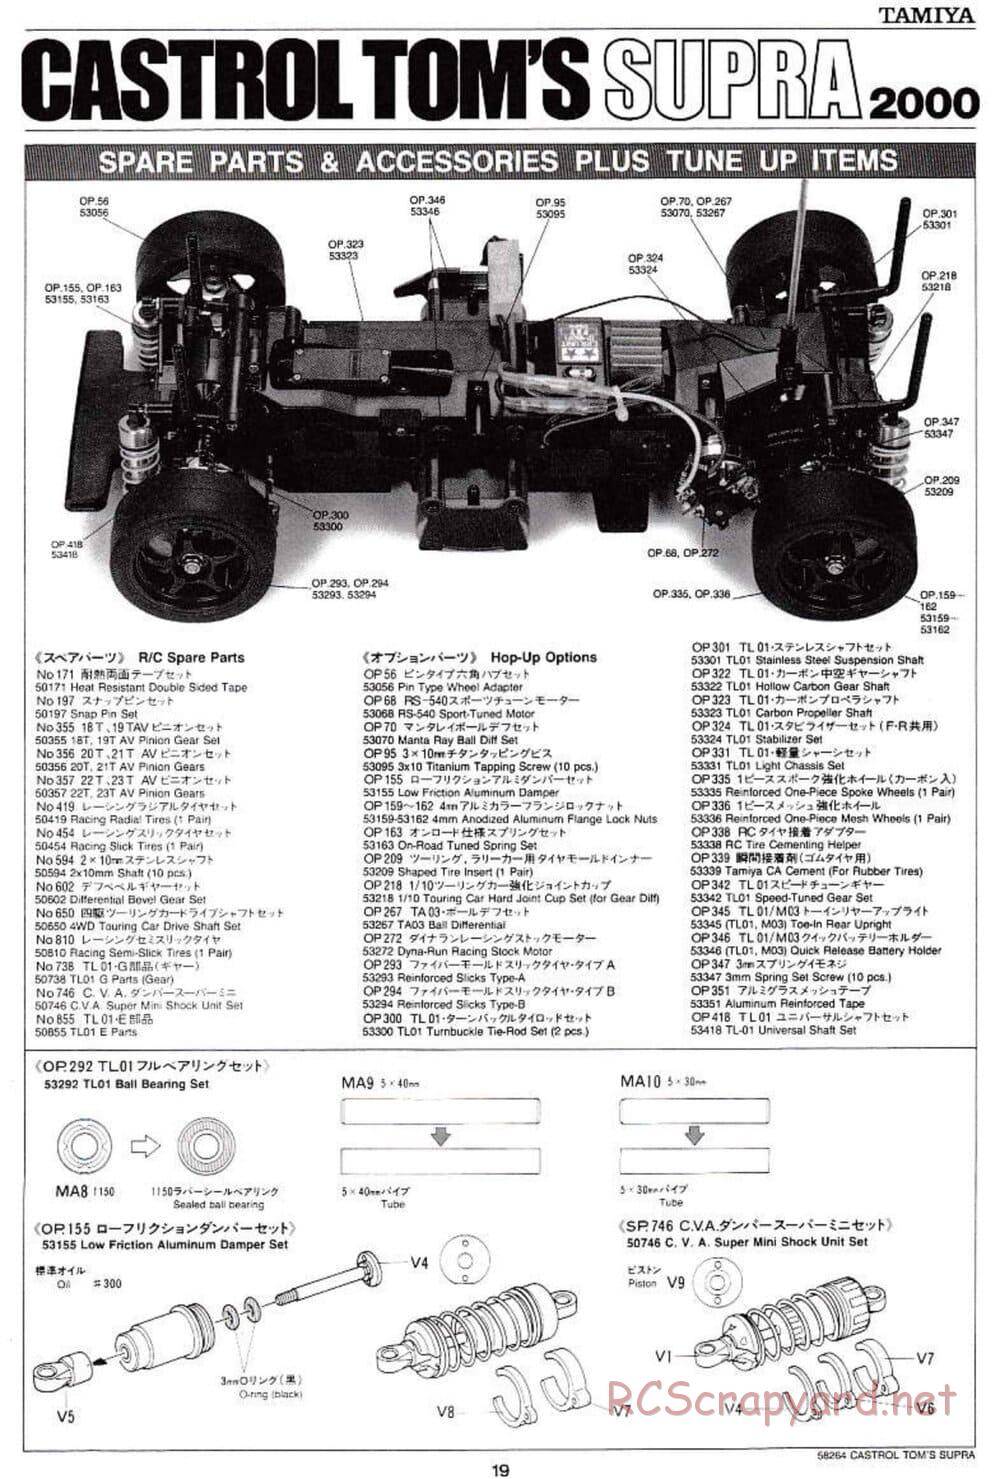 Tamiya - Castrol Tom's Supra 2000 - TL-01 Chassis - Manual - Page 19